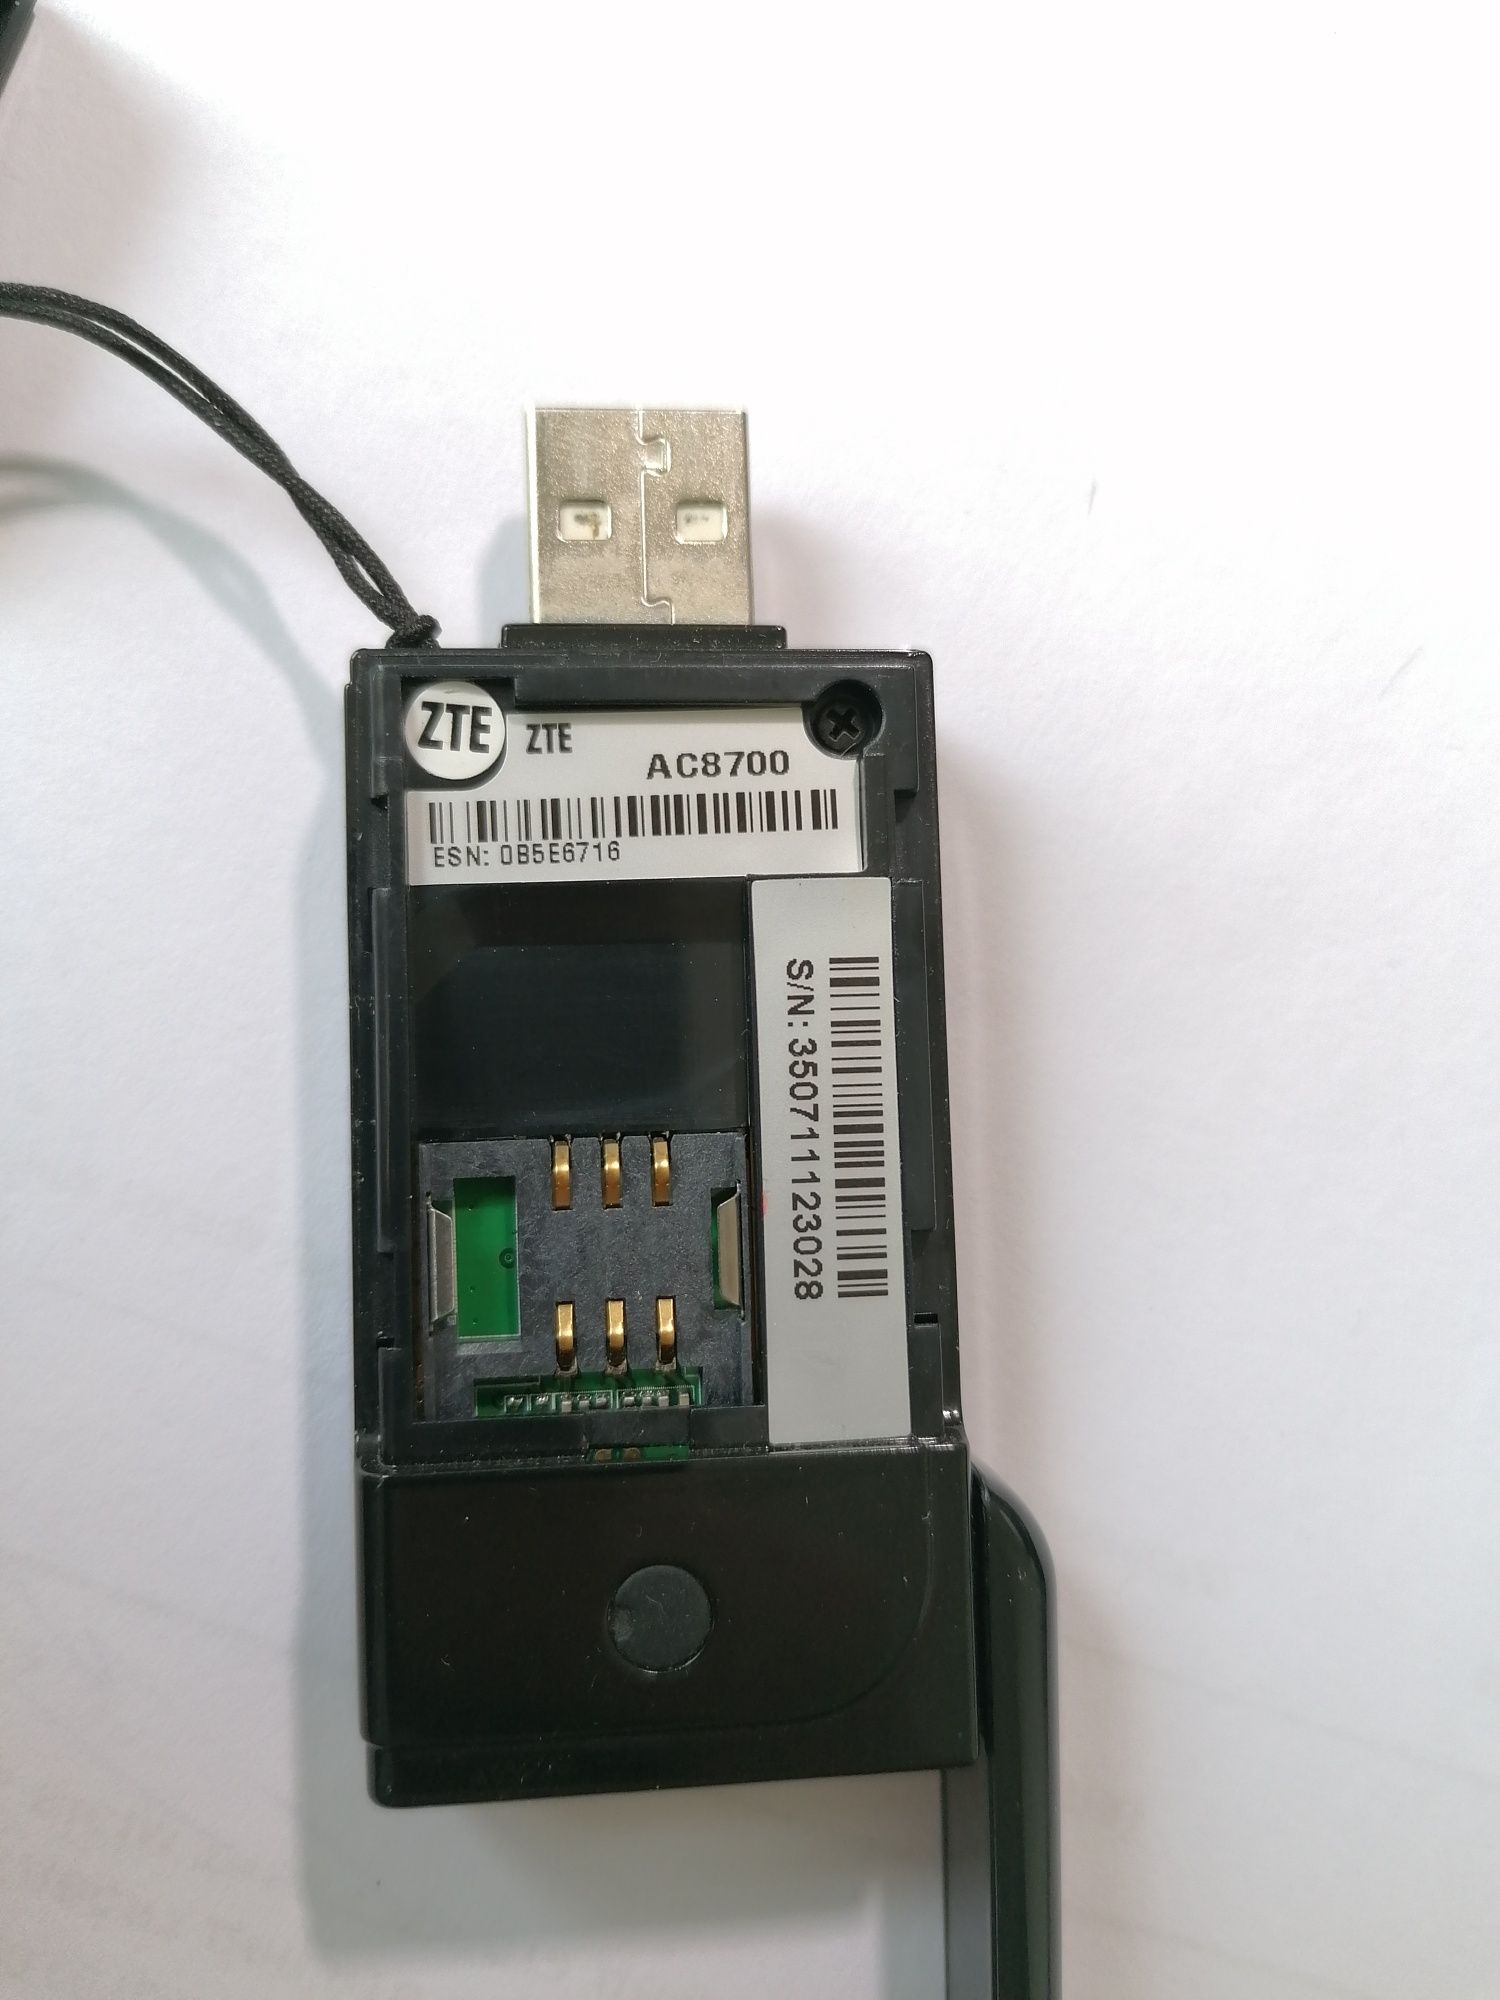 3G USB-модем AC8700 CDMA2000 1X EV-DO